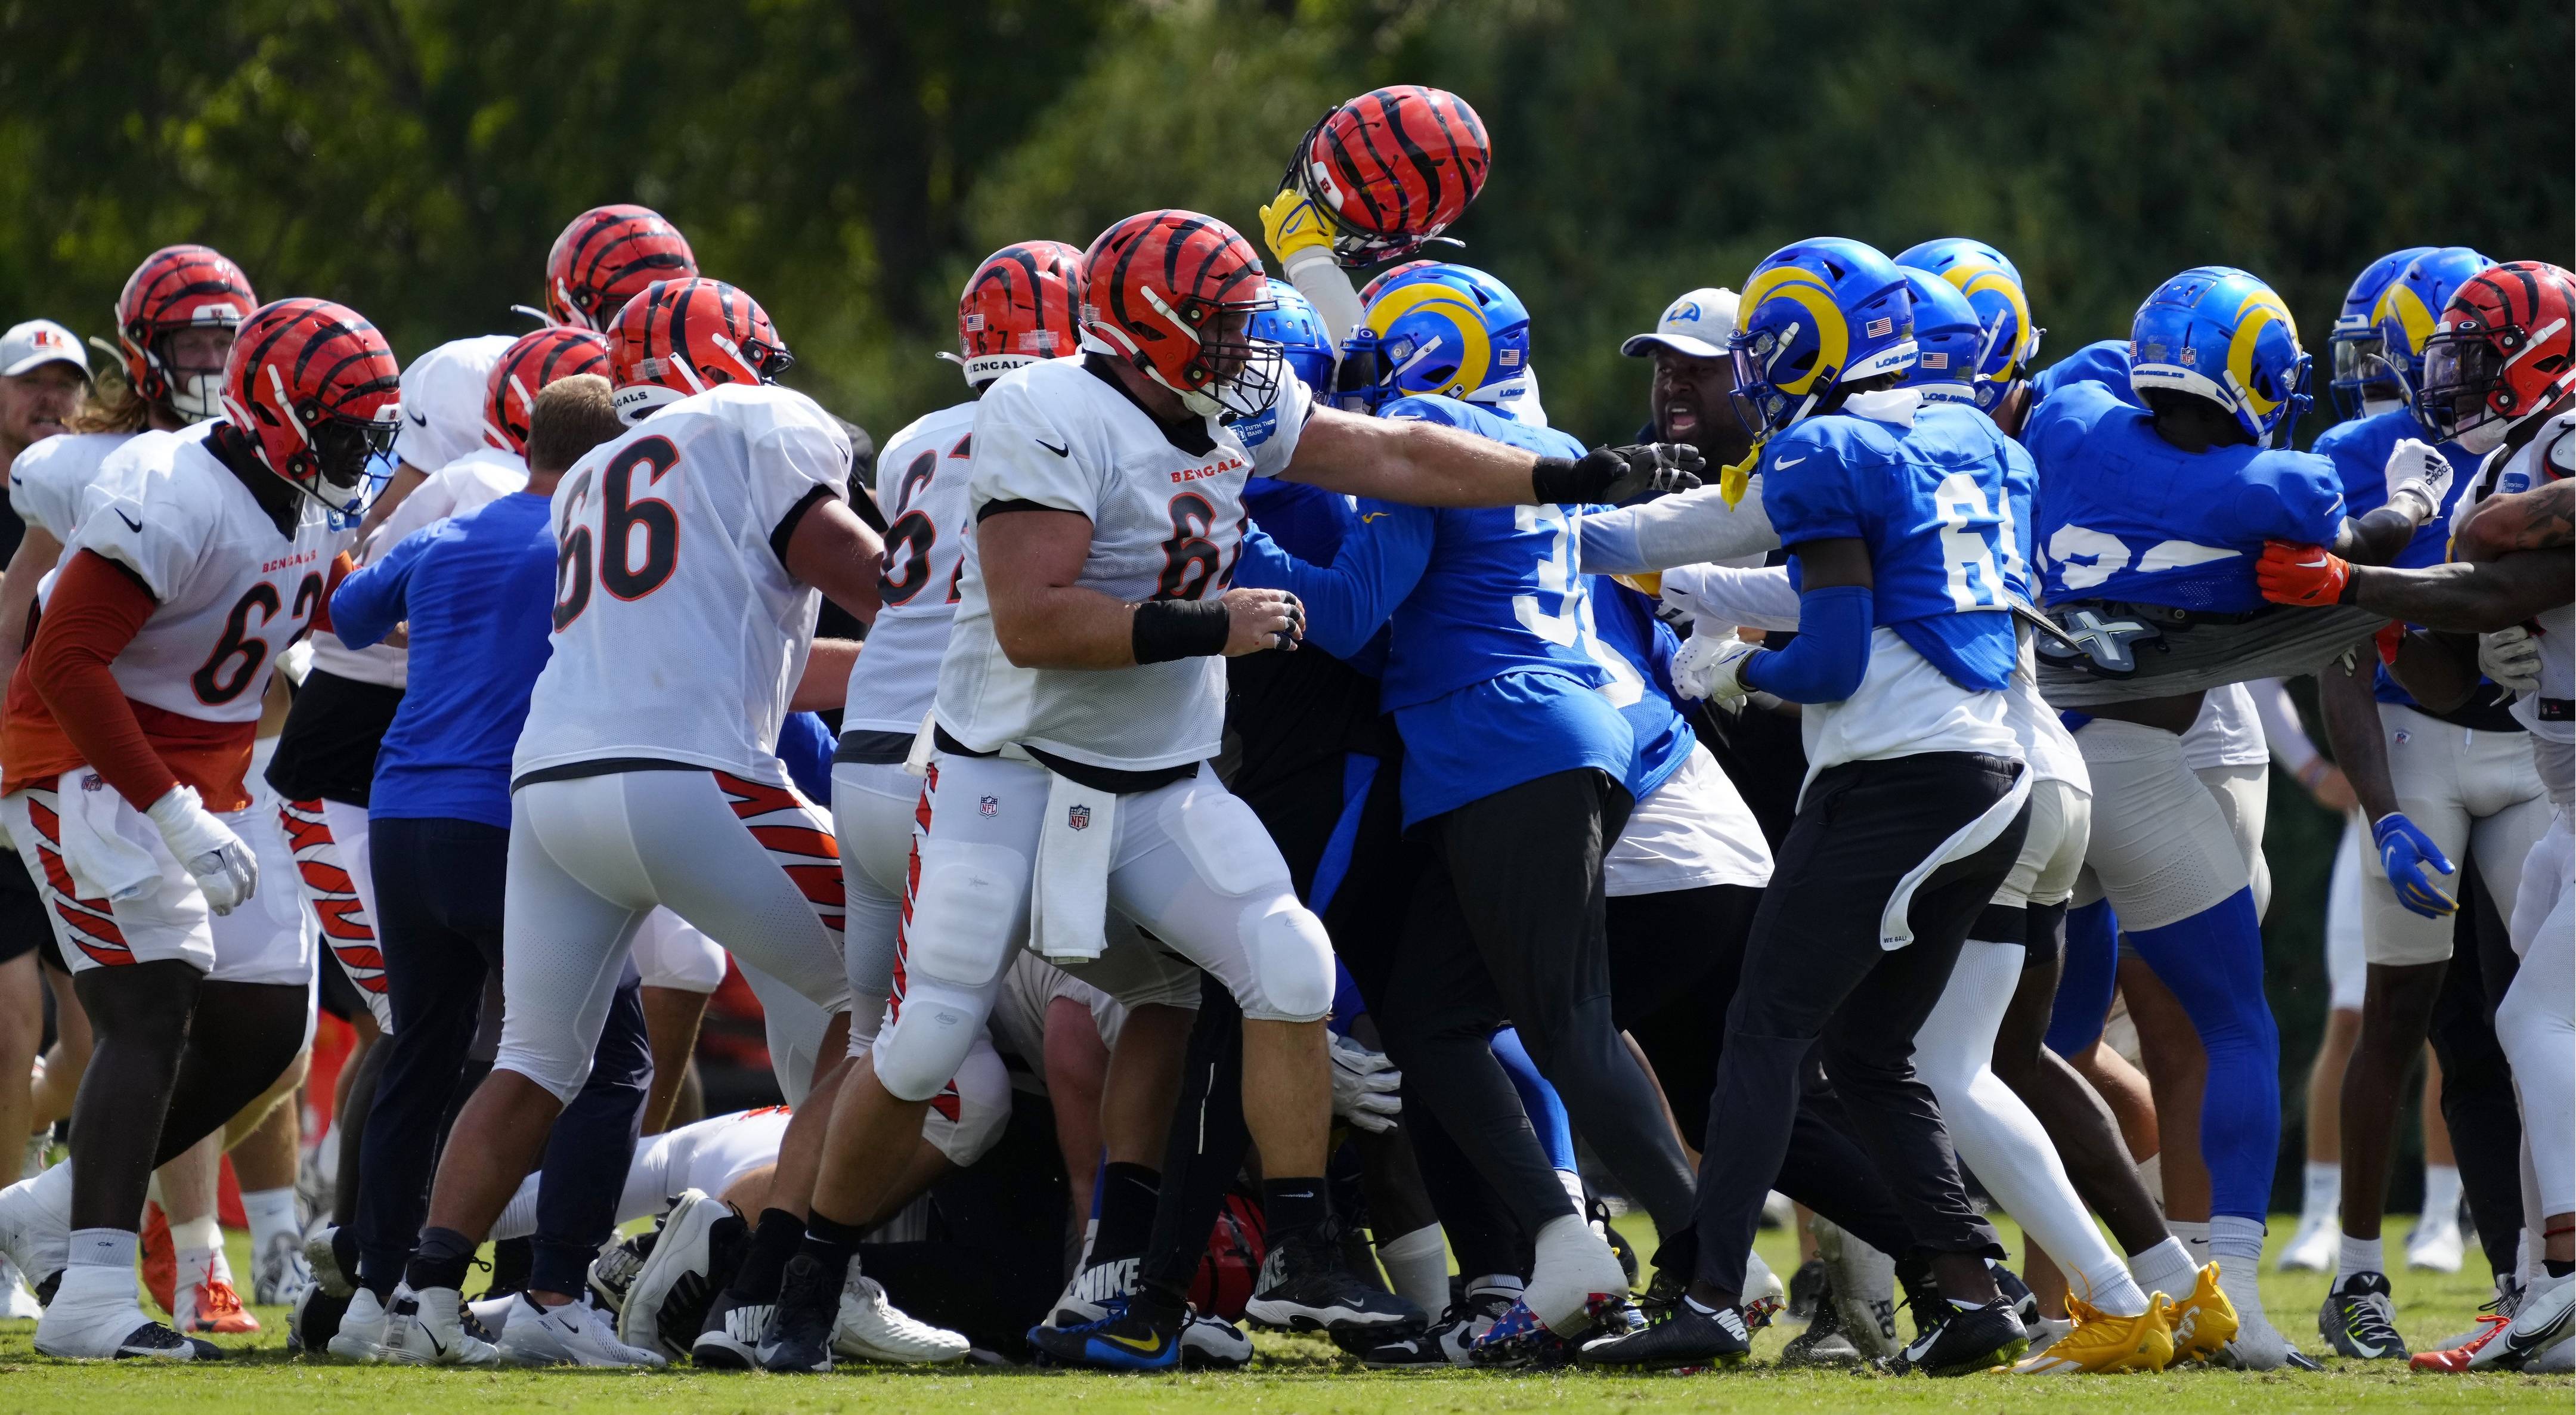 VIDEO: Brawl breaks out between Bengals, Rams during practice